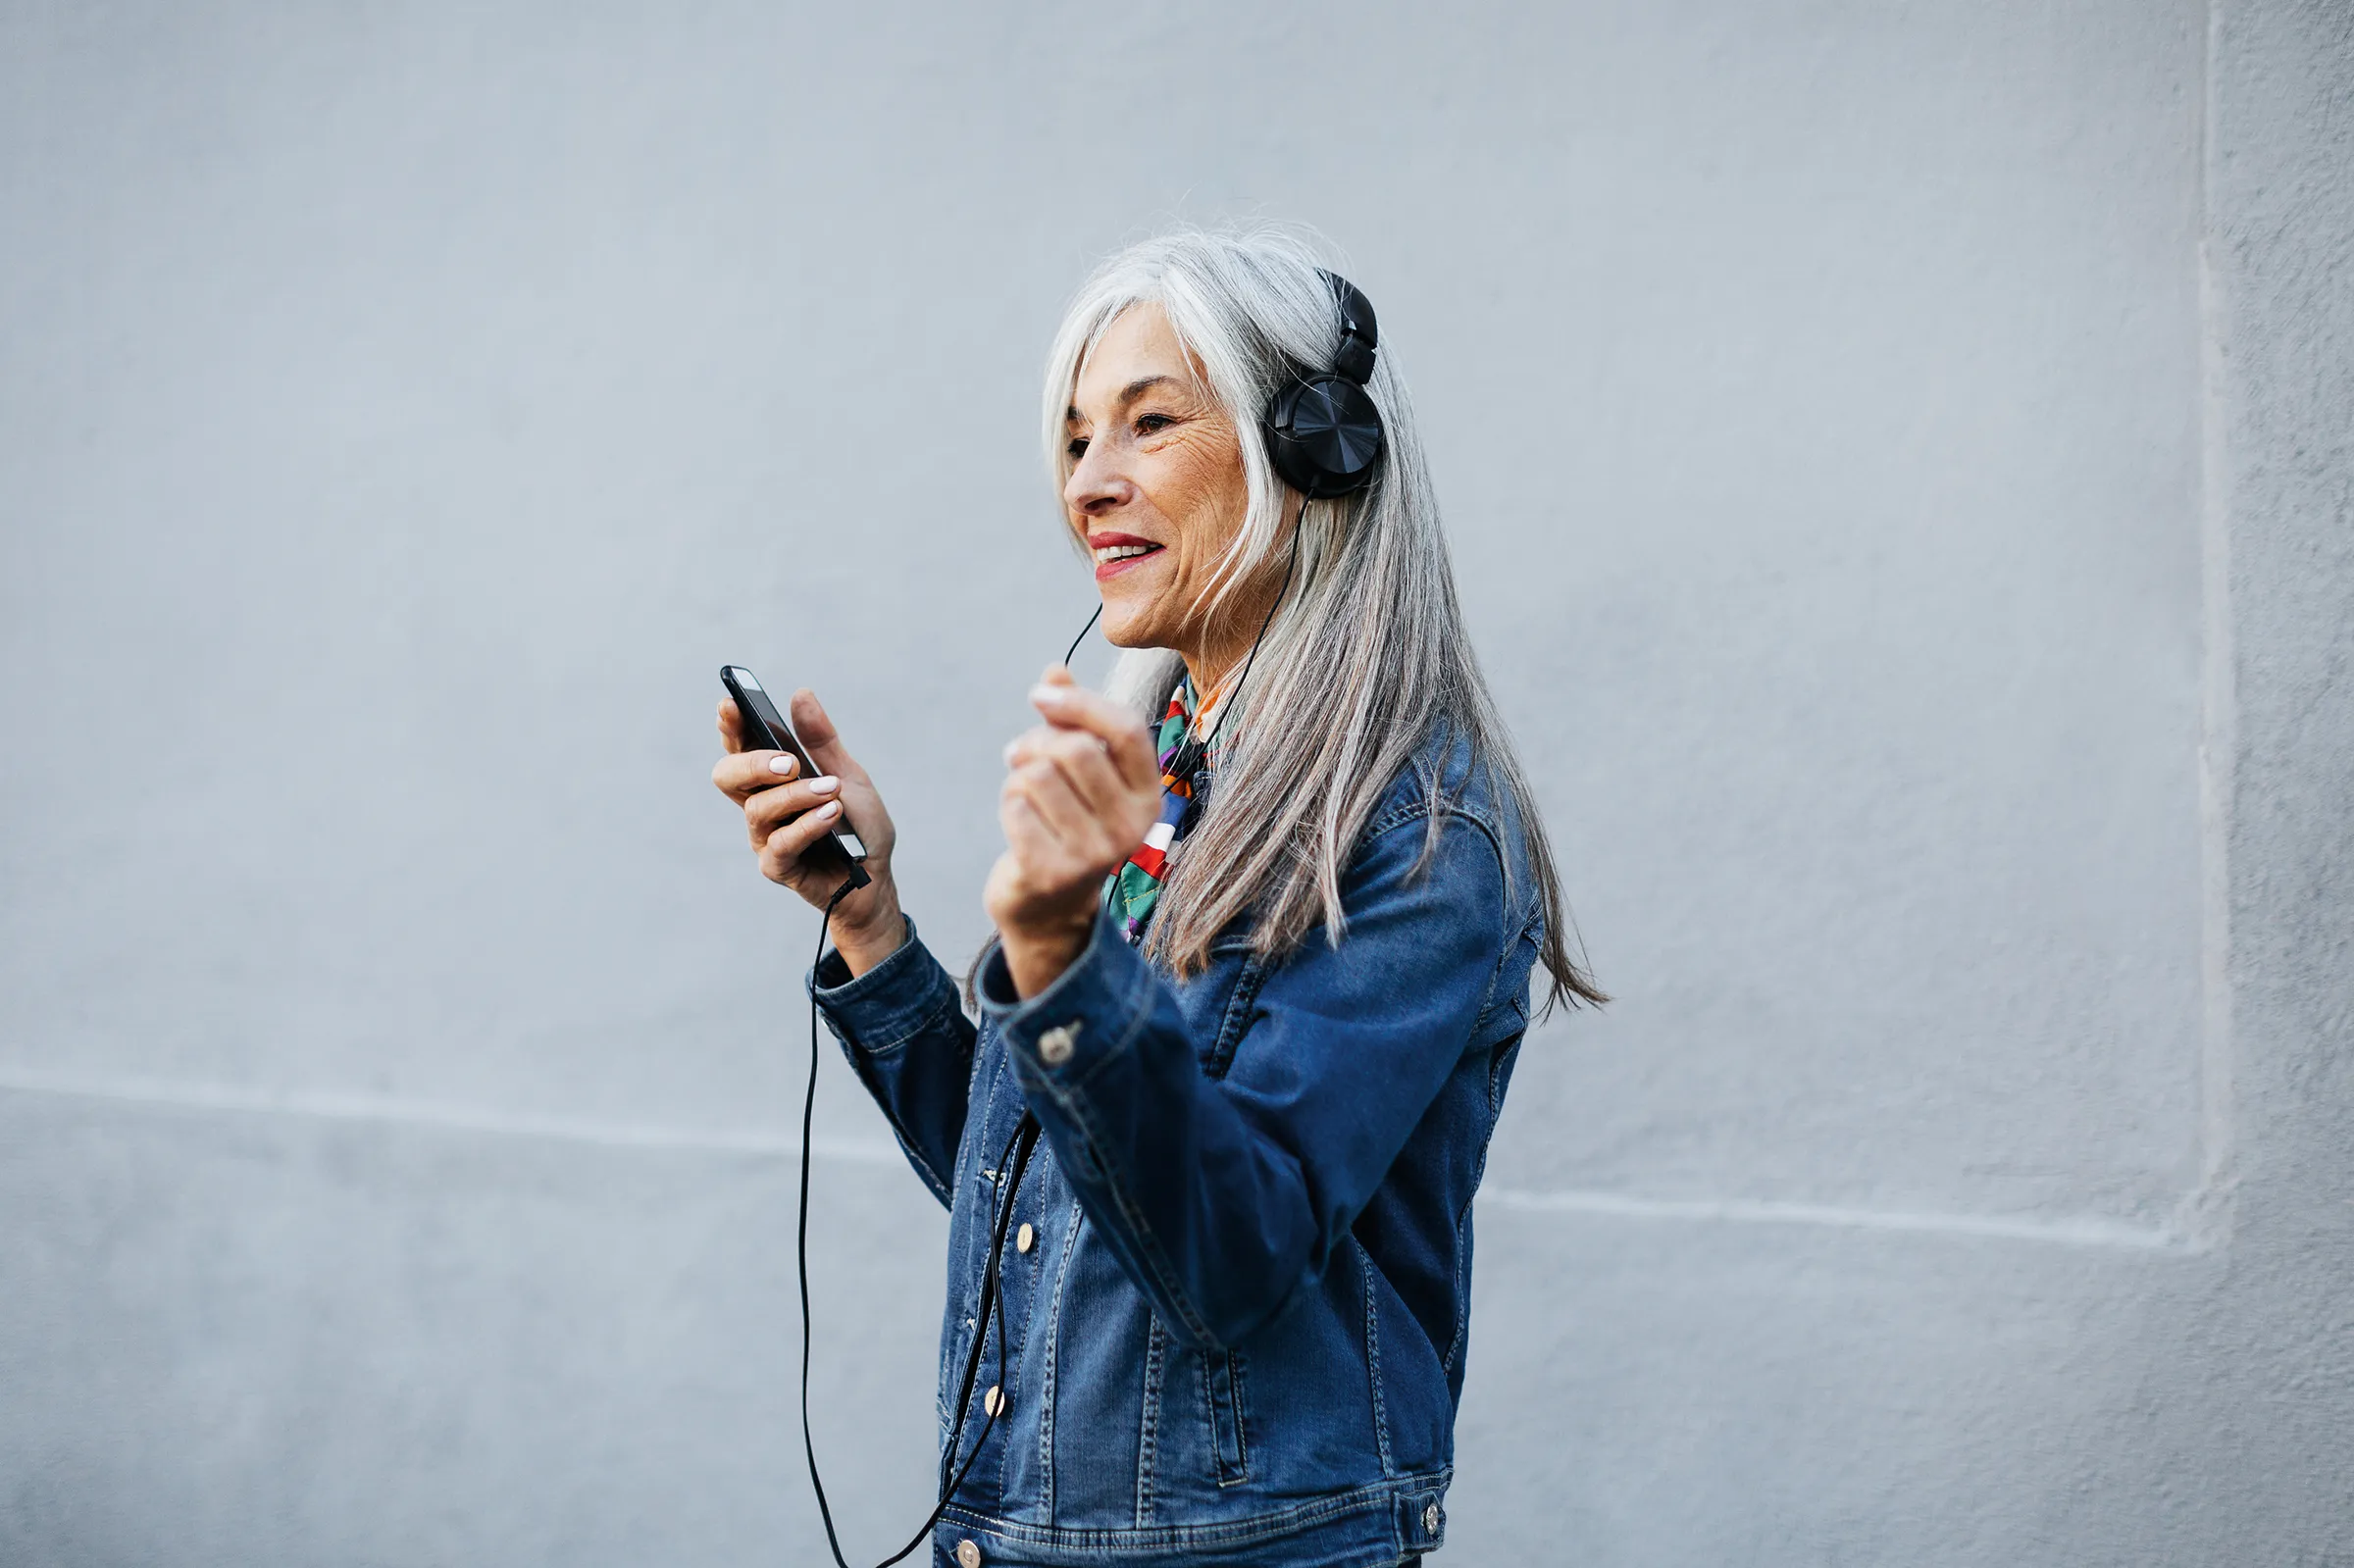 senior woman with headphones enjoying music